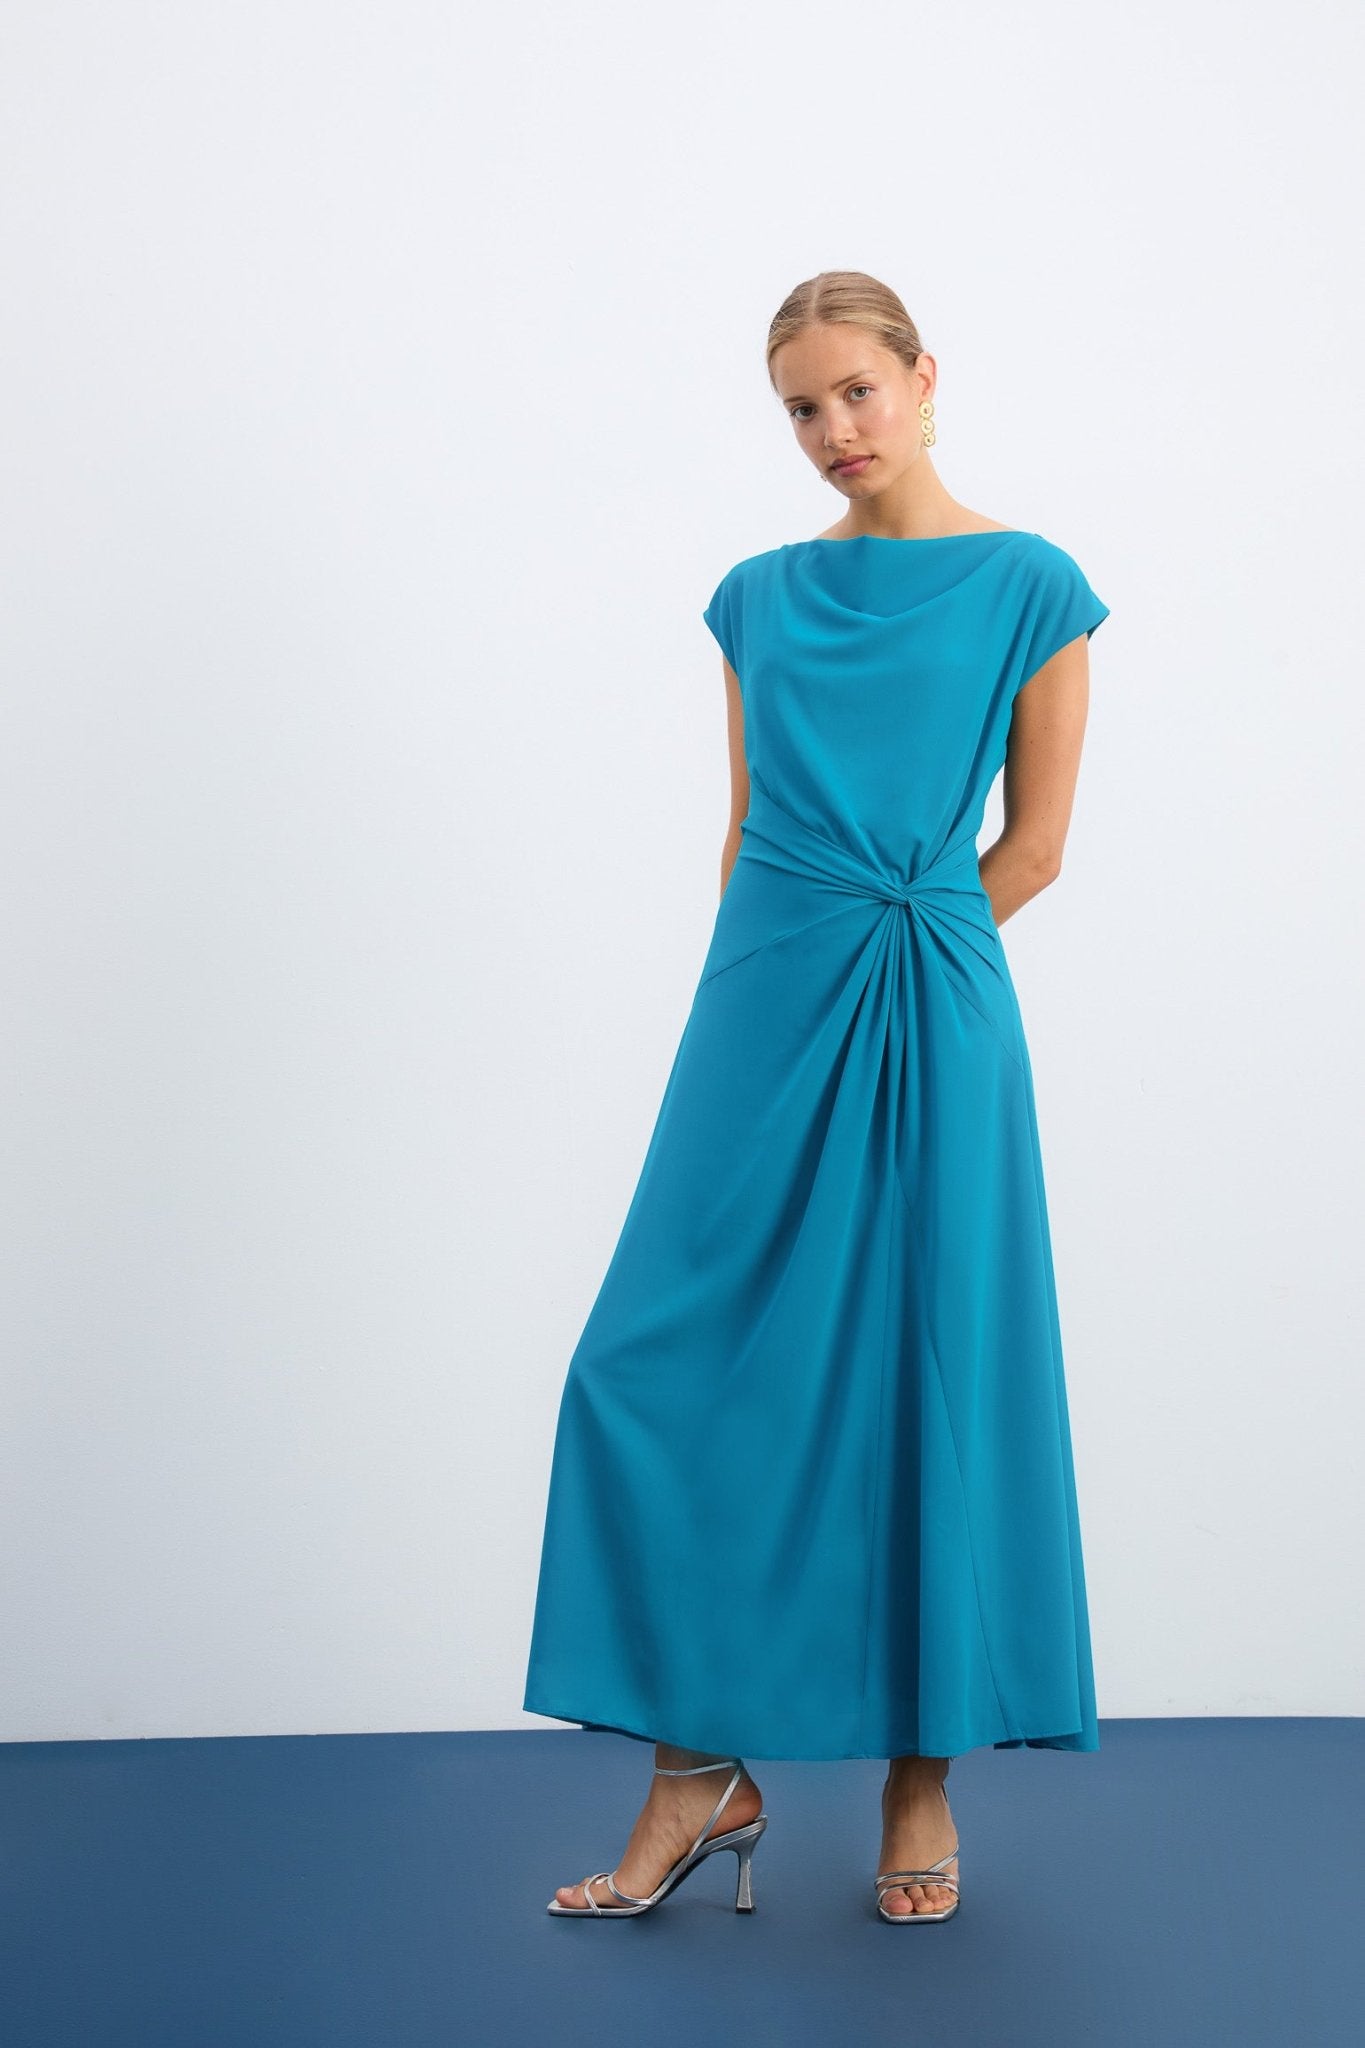 Vestido CIEL Turquoise - BIMANI